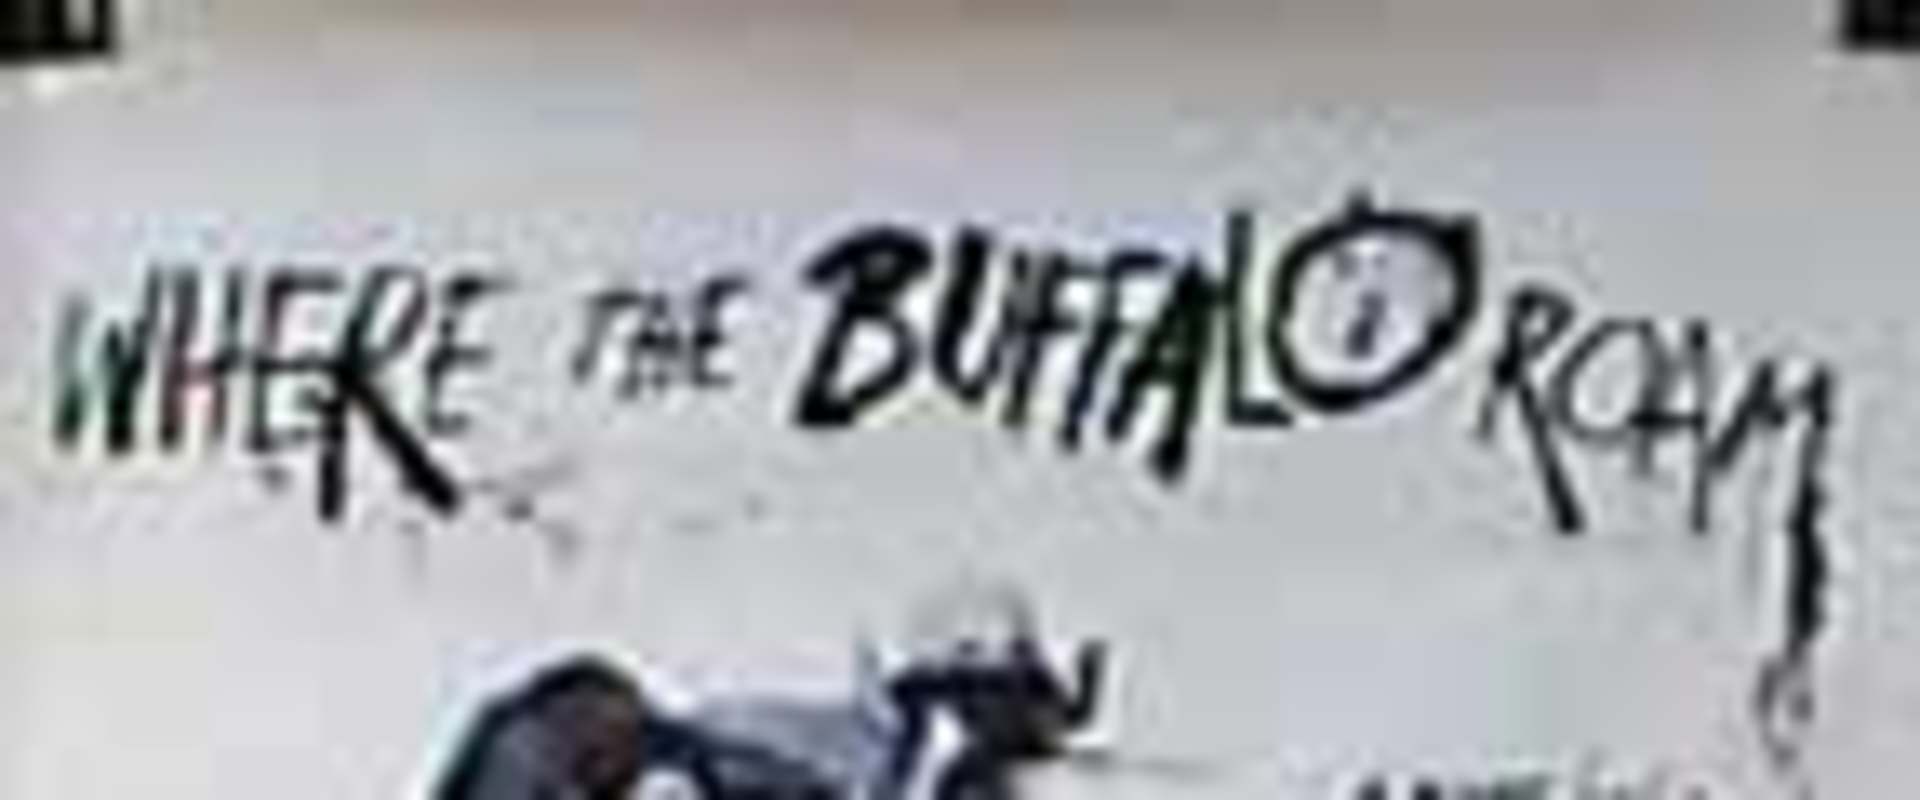 Where the Buffalo Roam background 1